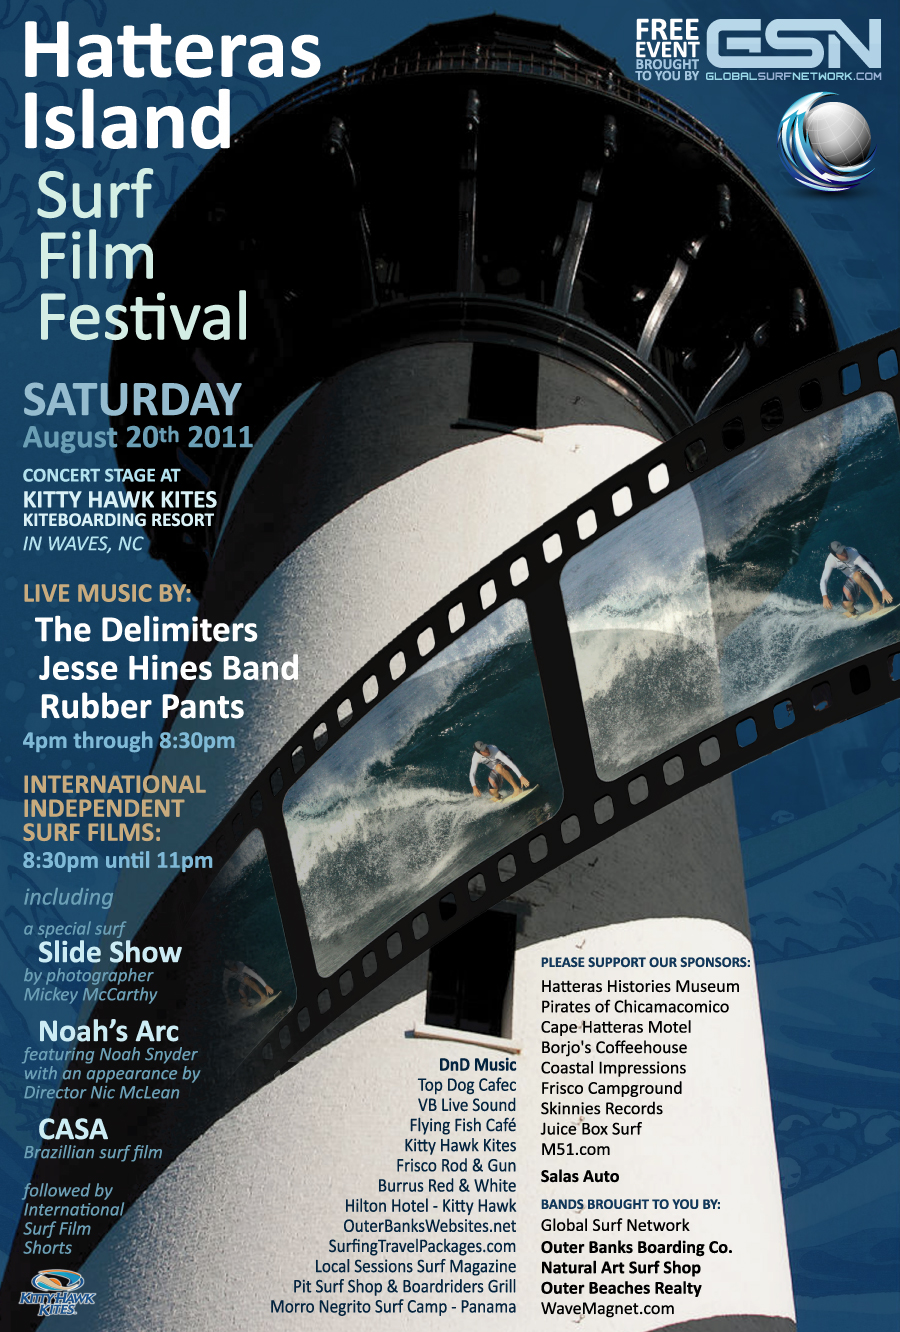 Hatteras Island Surf Film Festival